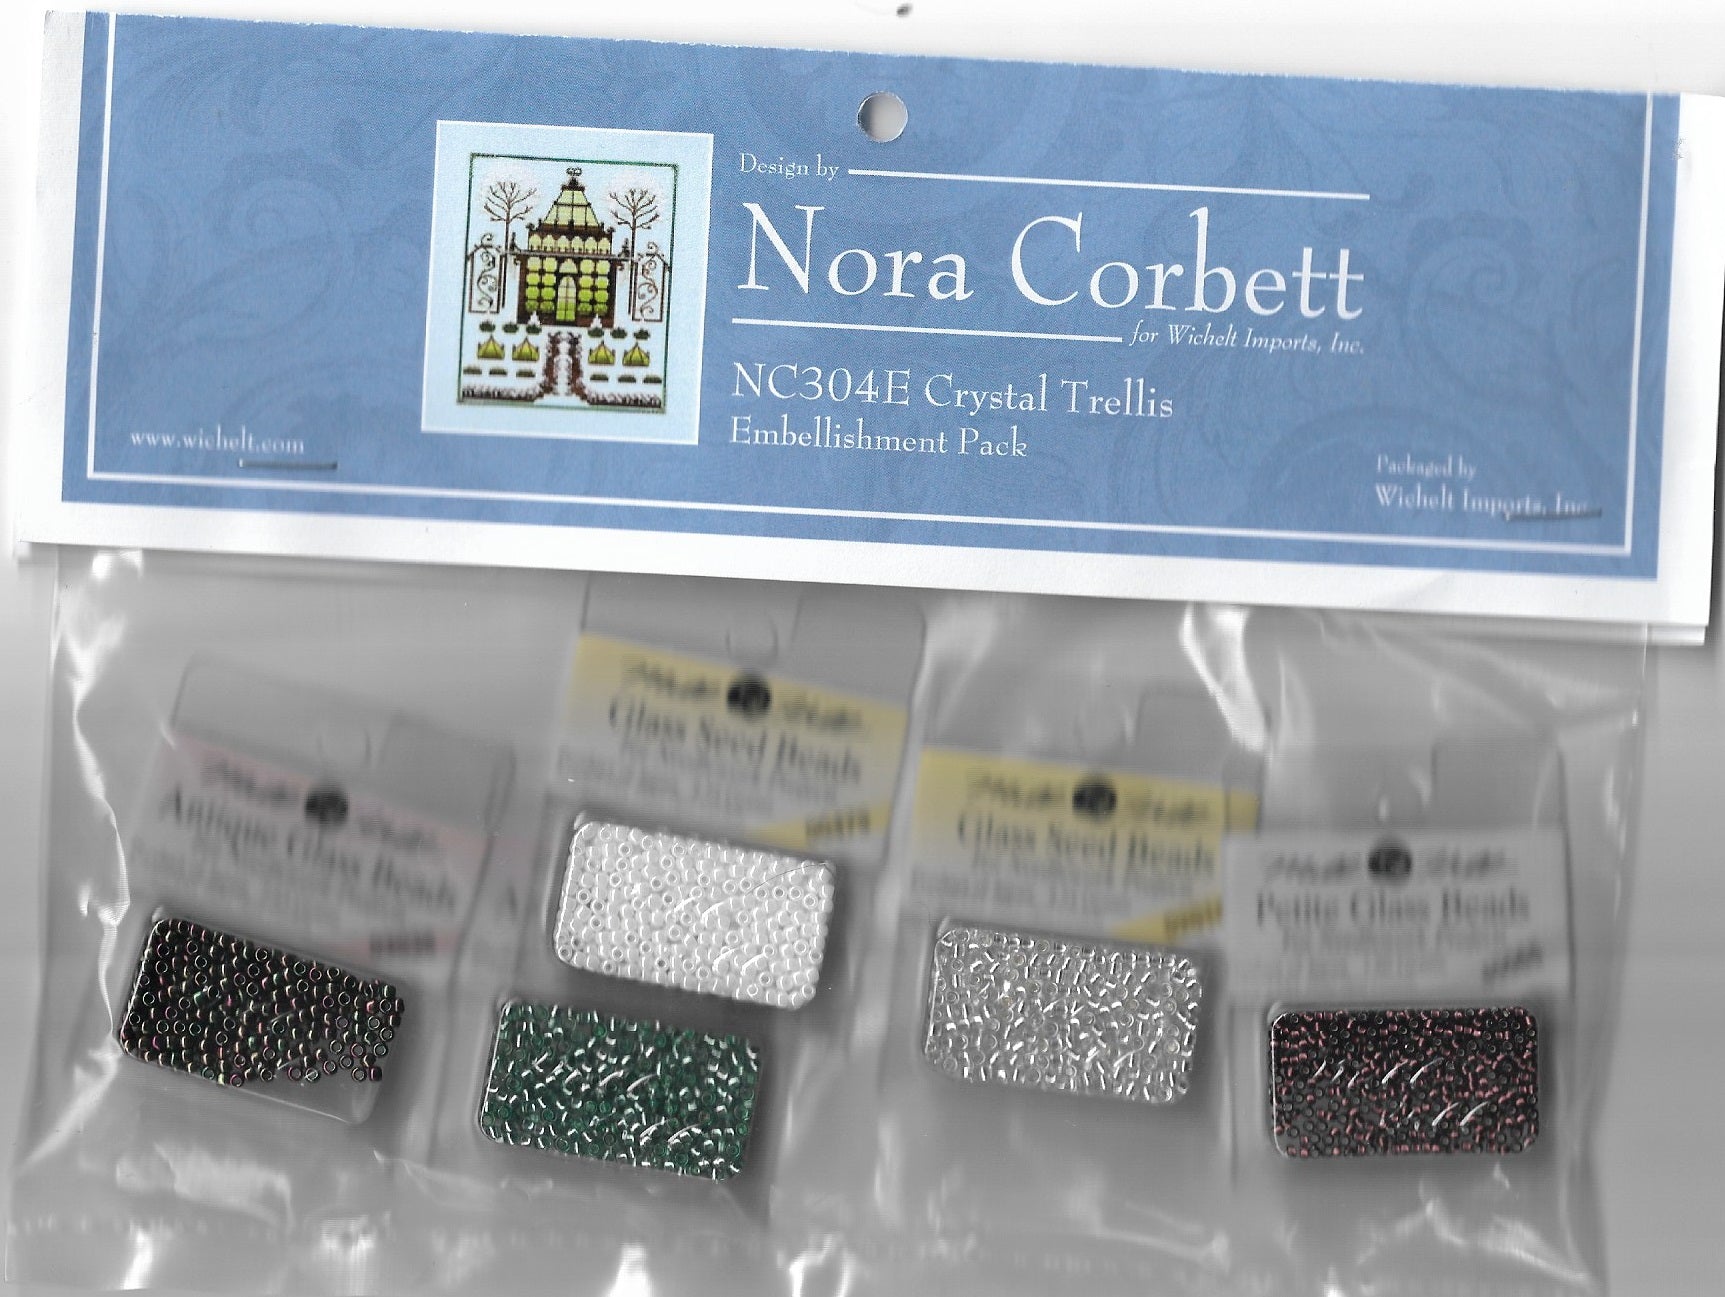 NORA Corbett's Crystal Trellis NC304 Embellishment Pack